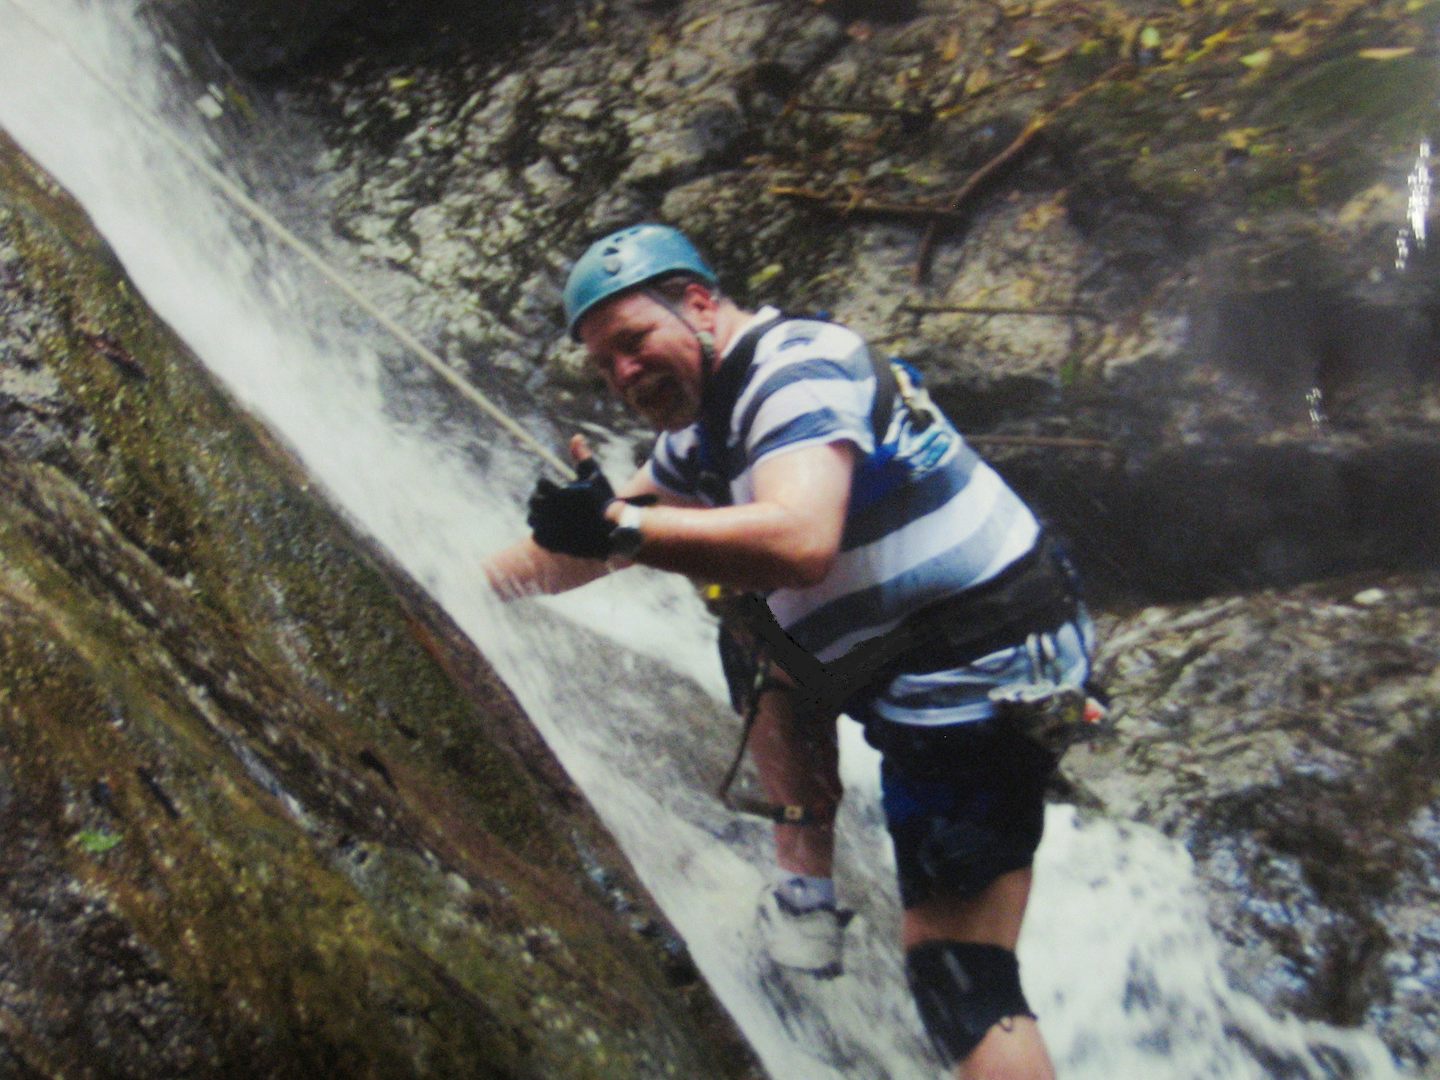 Waterfall climb, Costa Rica